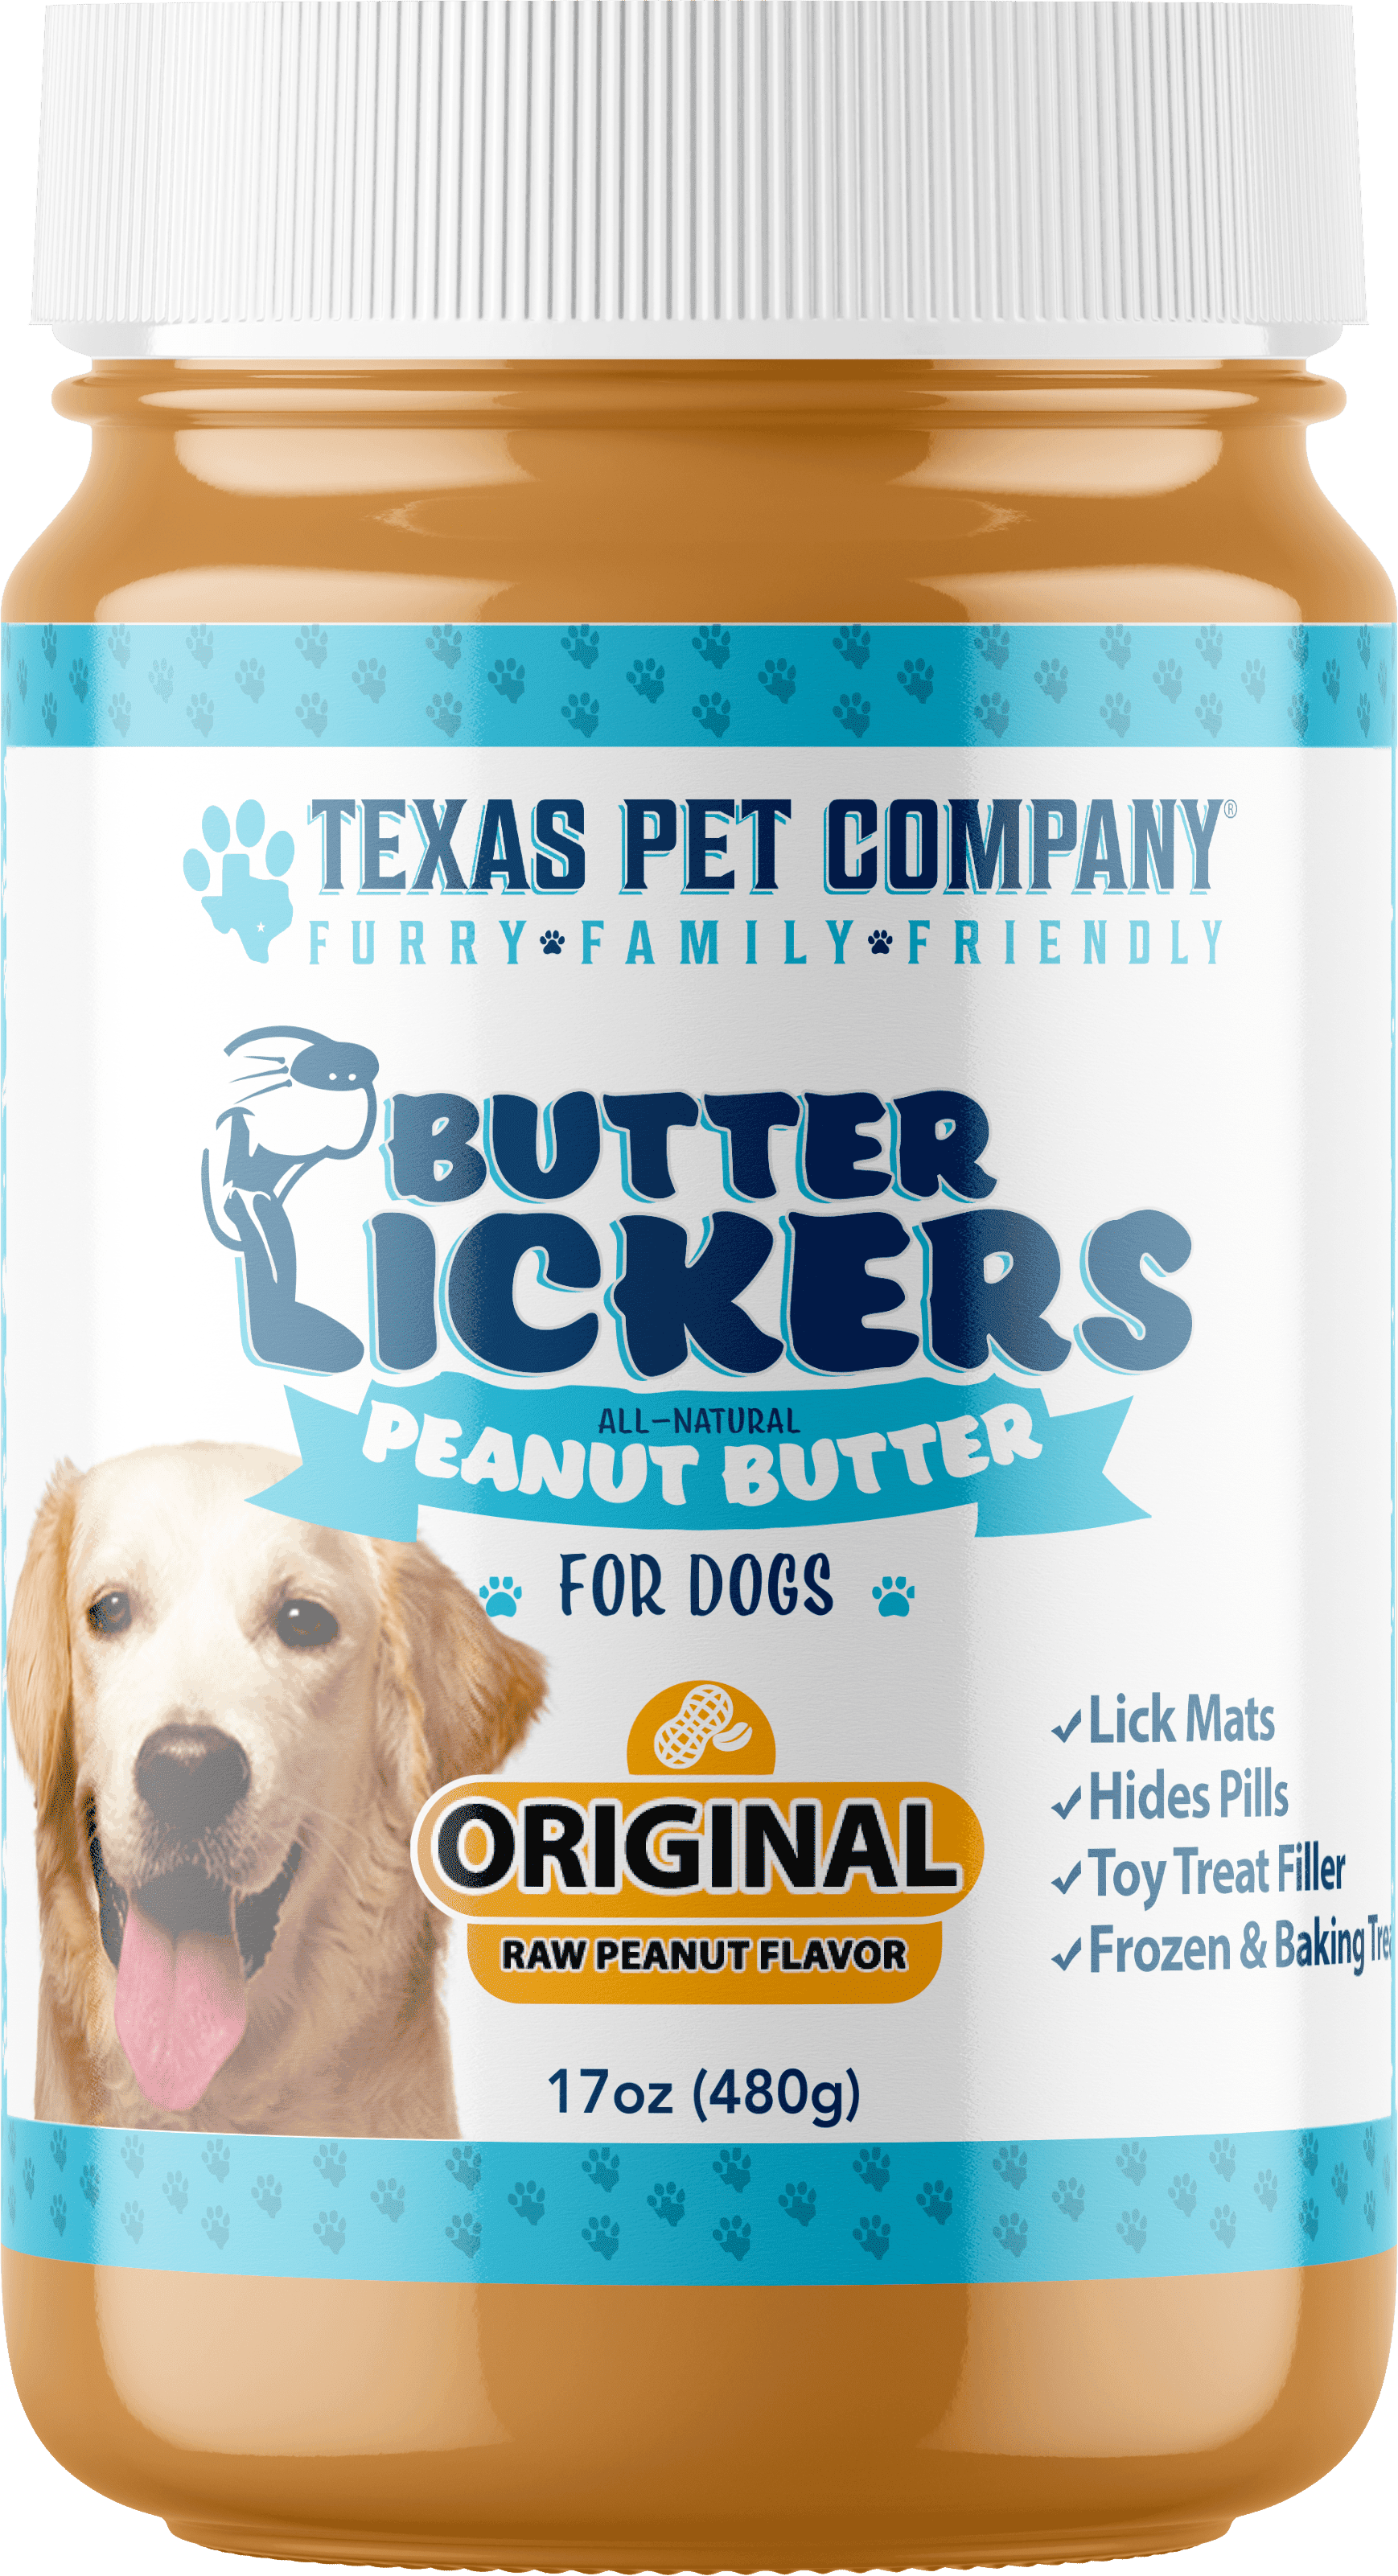 https://texaspetcompany.com/wp-content/uploads/2021/08/Butter-Lickers-Original-Dog-Peanut-Butter-Front-Texas-Pet-Company2.png